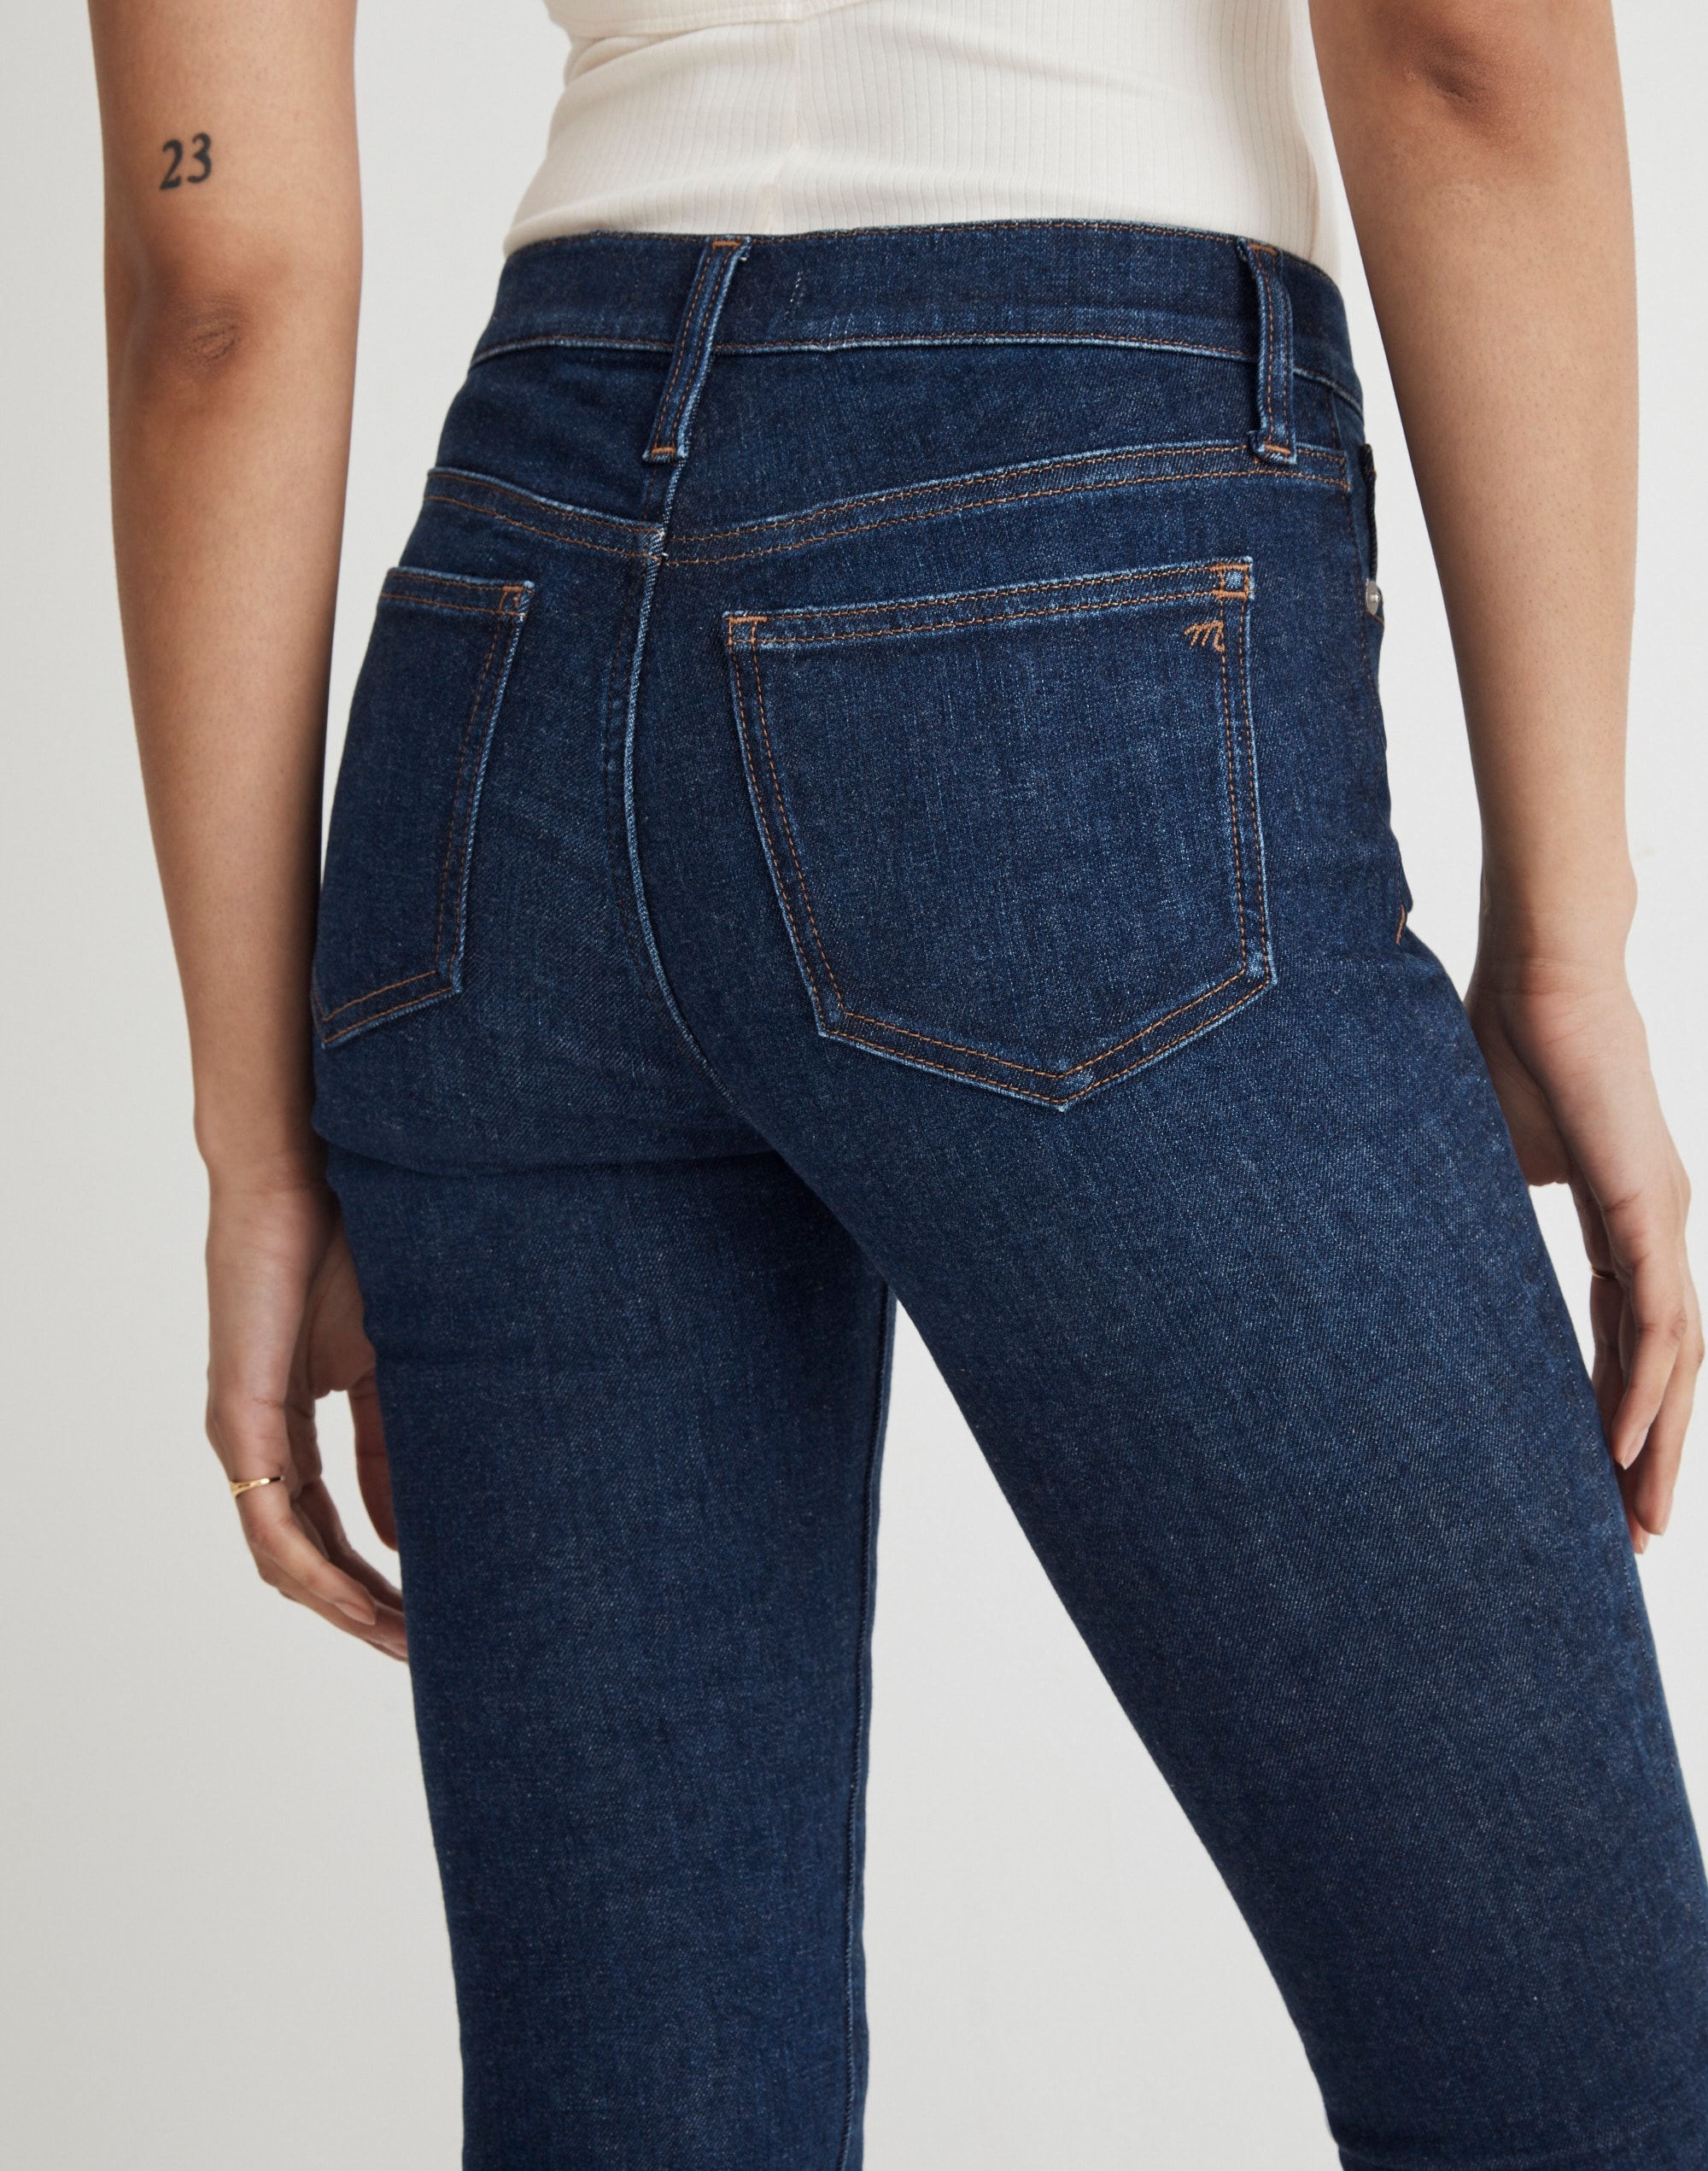 8" Skinny Jeans in Cortland Wash